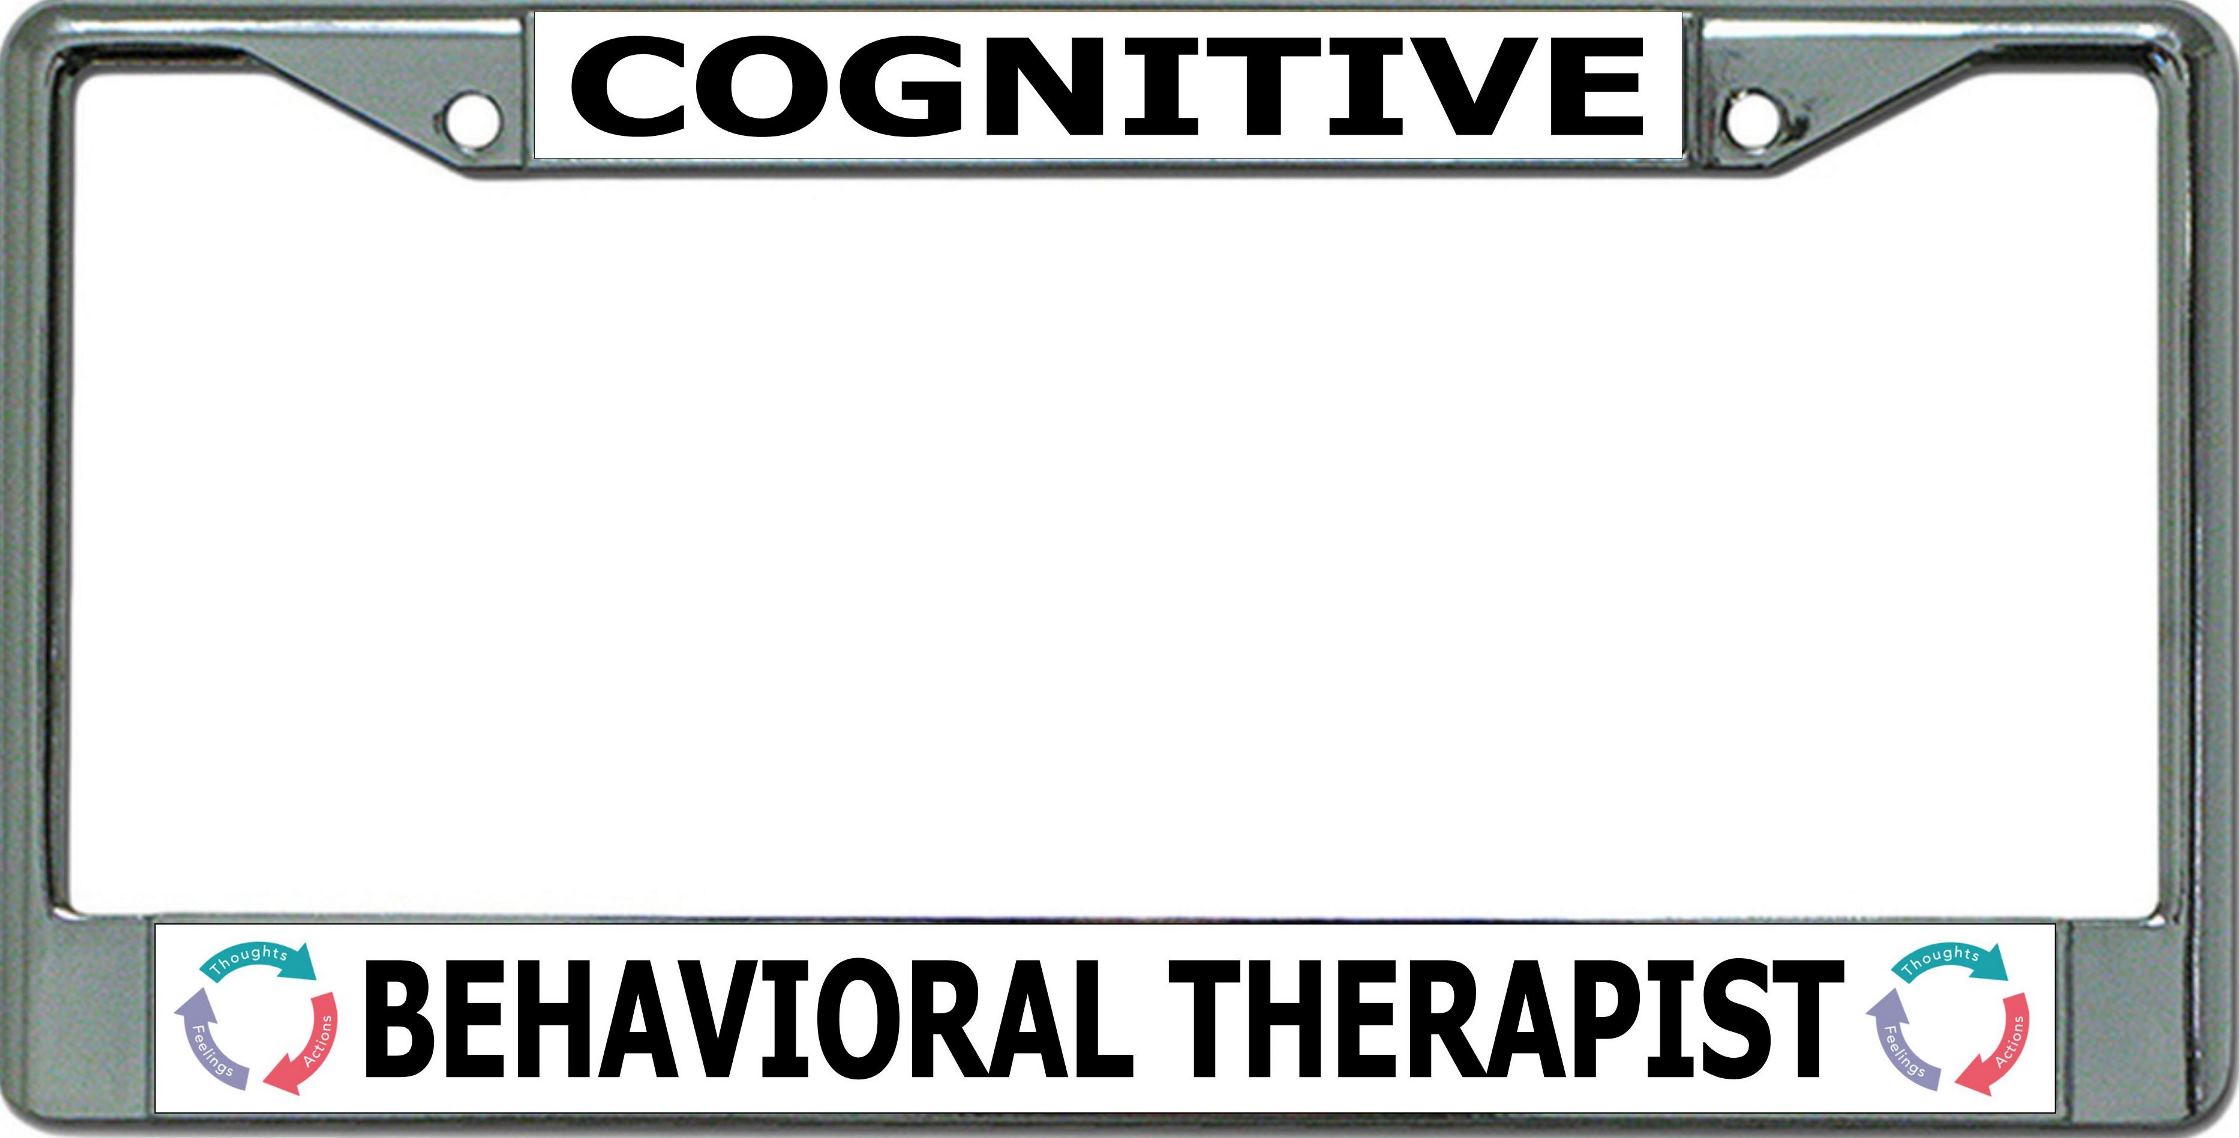 Behavioral Therapist Cognitive Chrome License Plate FRAME